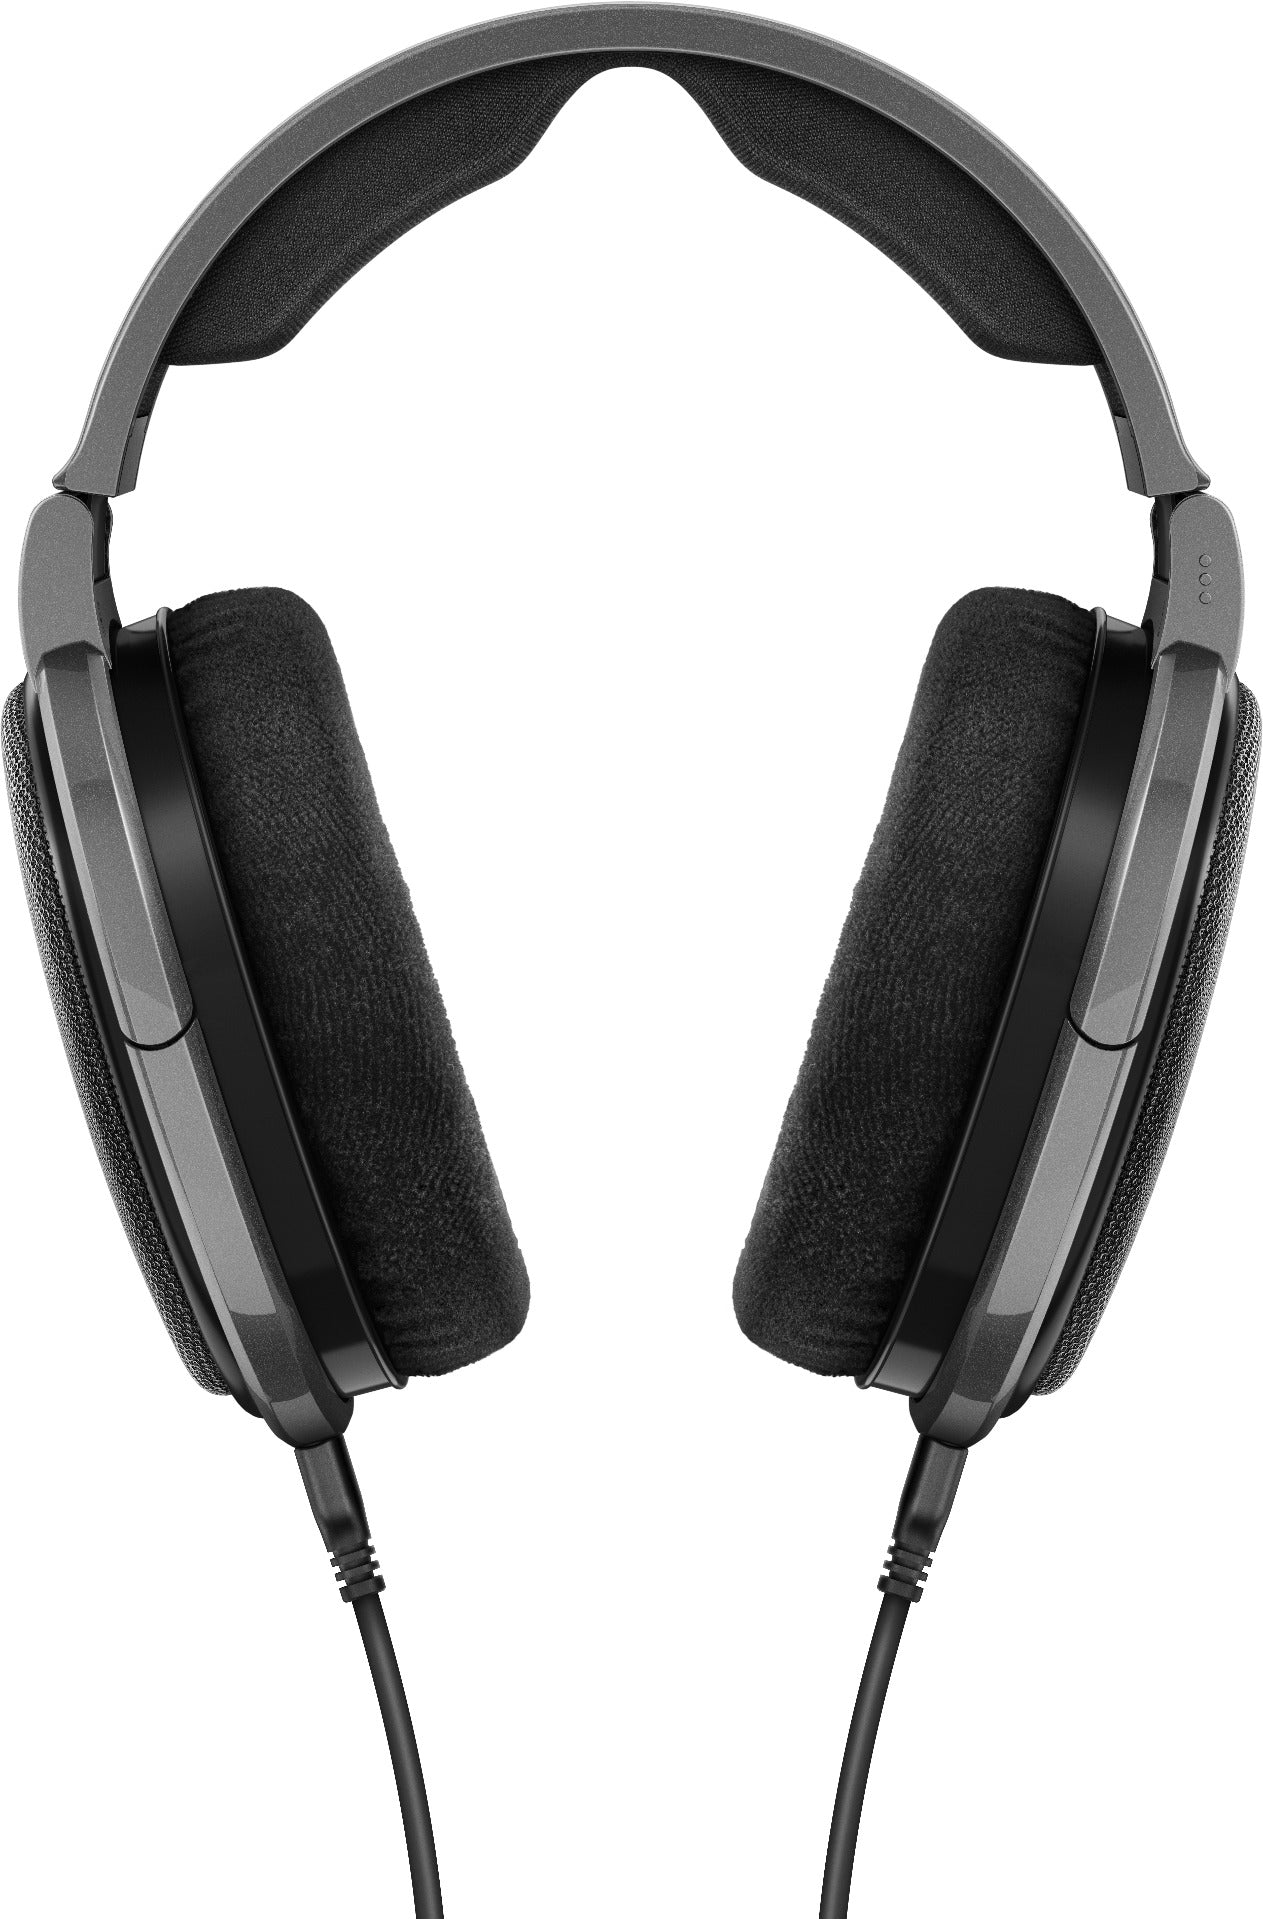 Sennheiser HD 650 Pro Open Air Professional Headphones